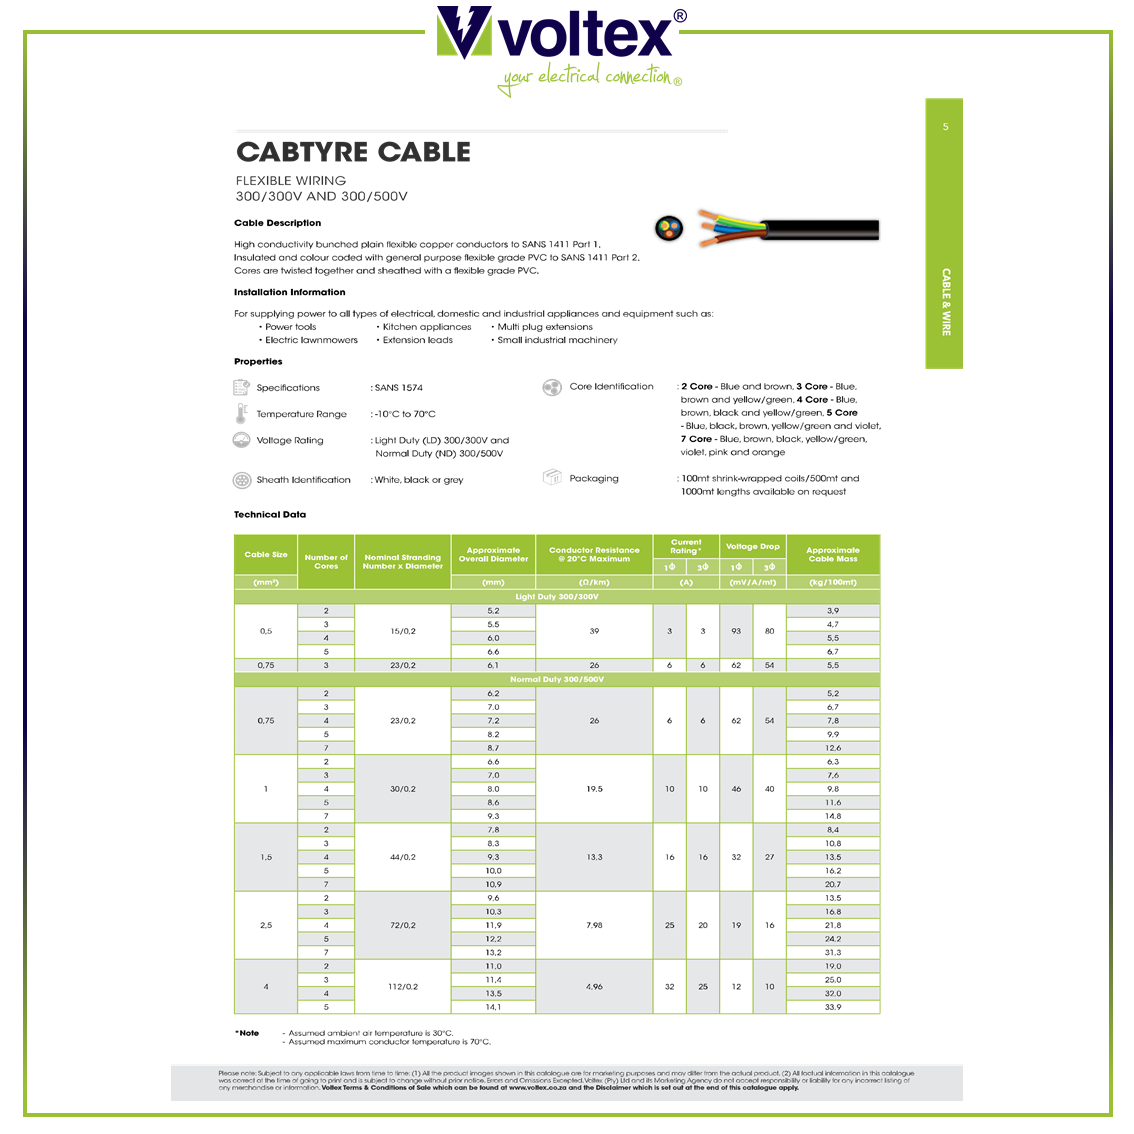 VOLTEX - Cabtyre Cable Catalogue